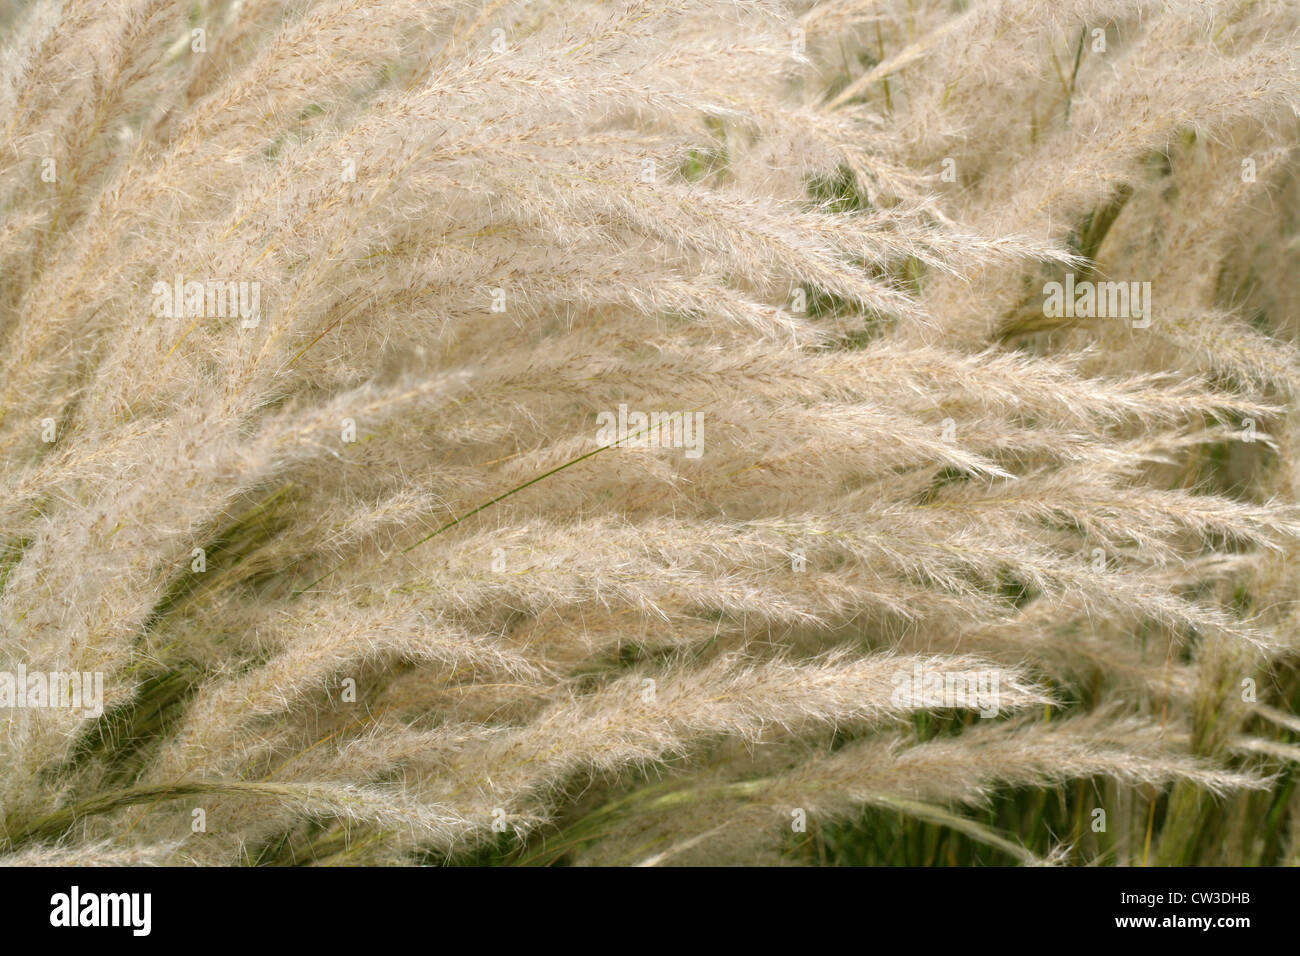 Peruvian Feathergrass, Stipa ichu (Jarava ichu), Poaceae. South and Central Americas, Mexico. Stock Photo